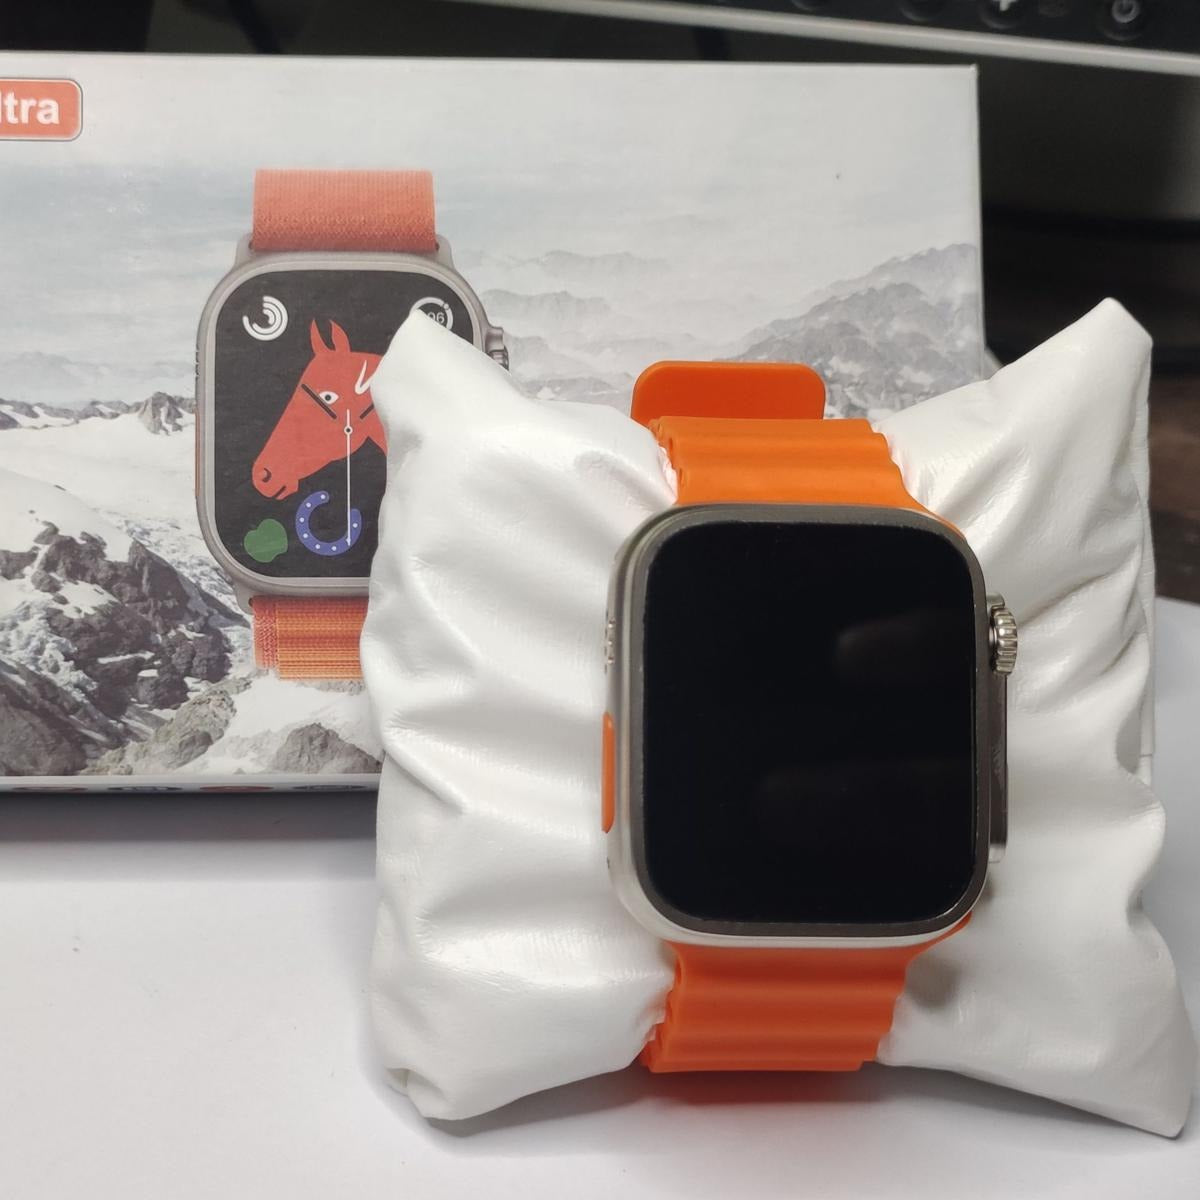 The $35 Padgene DZ09 Smart Watch Has Mobile Features And Camera | by Bledi  Memishaj | Medium